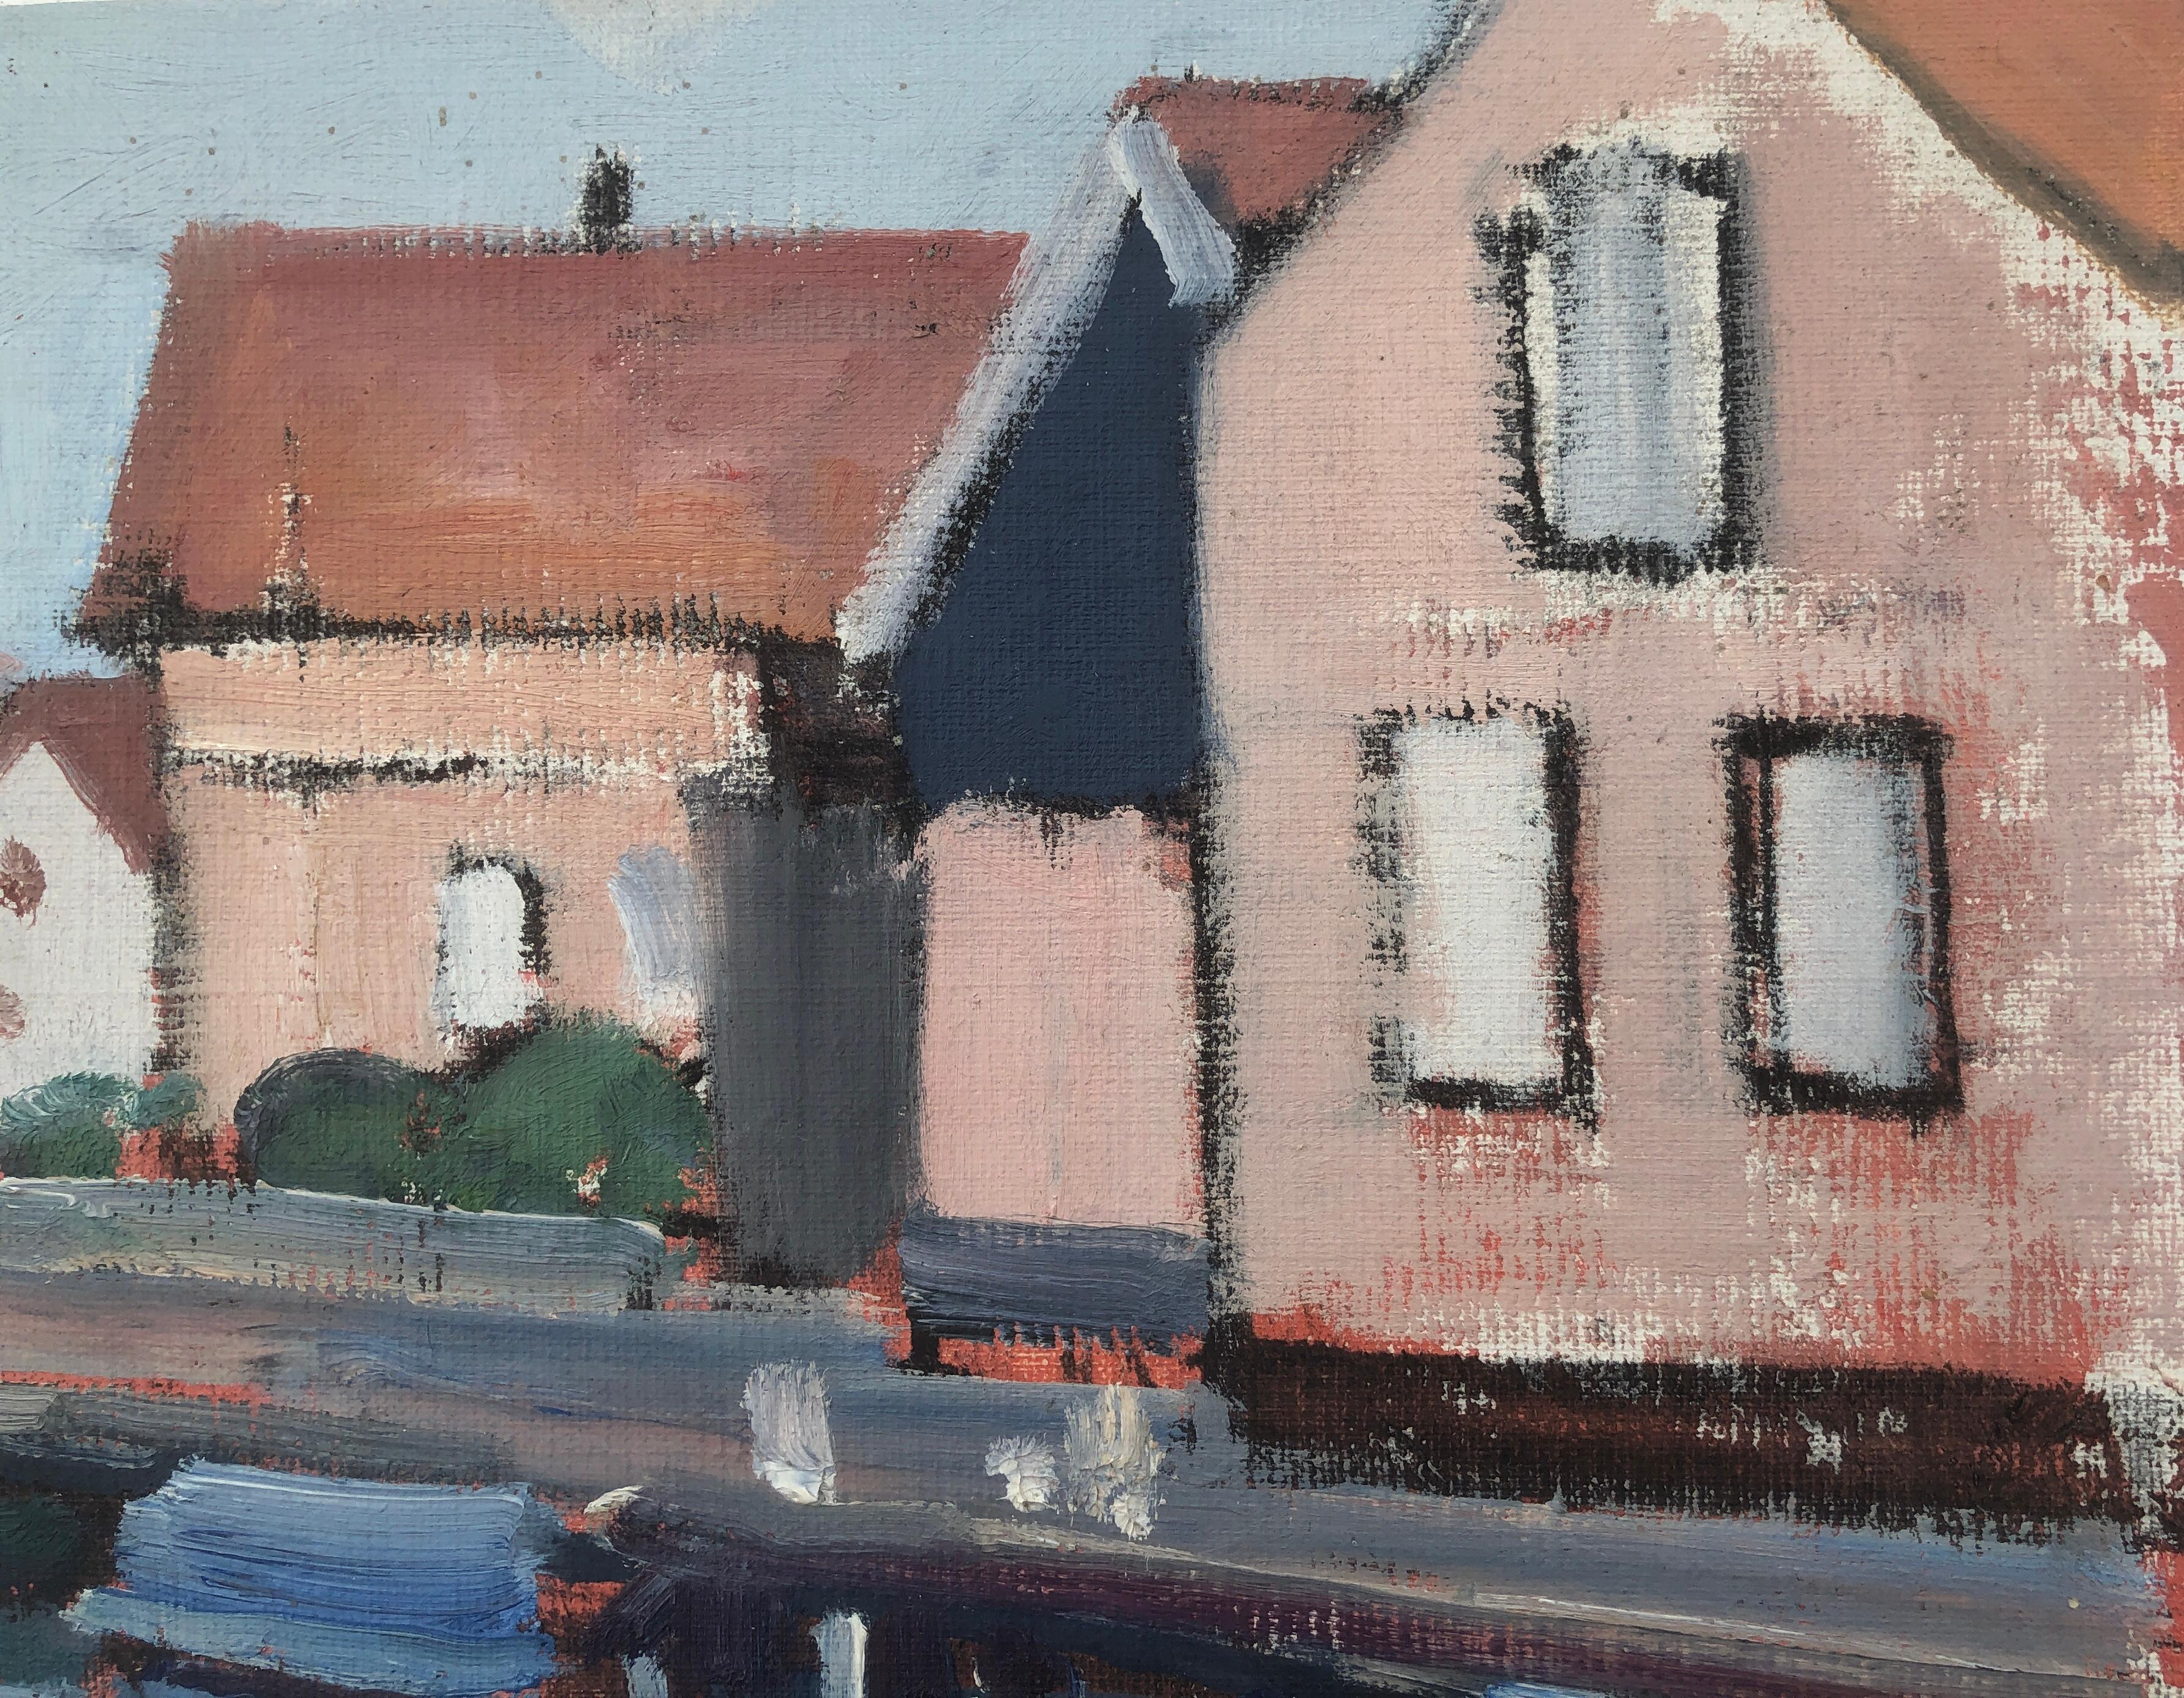 Spakenburg Netherlands oil painting seascape landscape urbanscape - Post-Impressionist Painting by Rafael Duran Benet